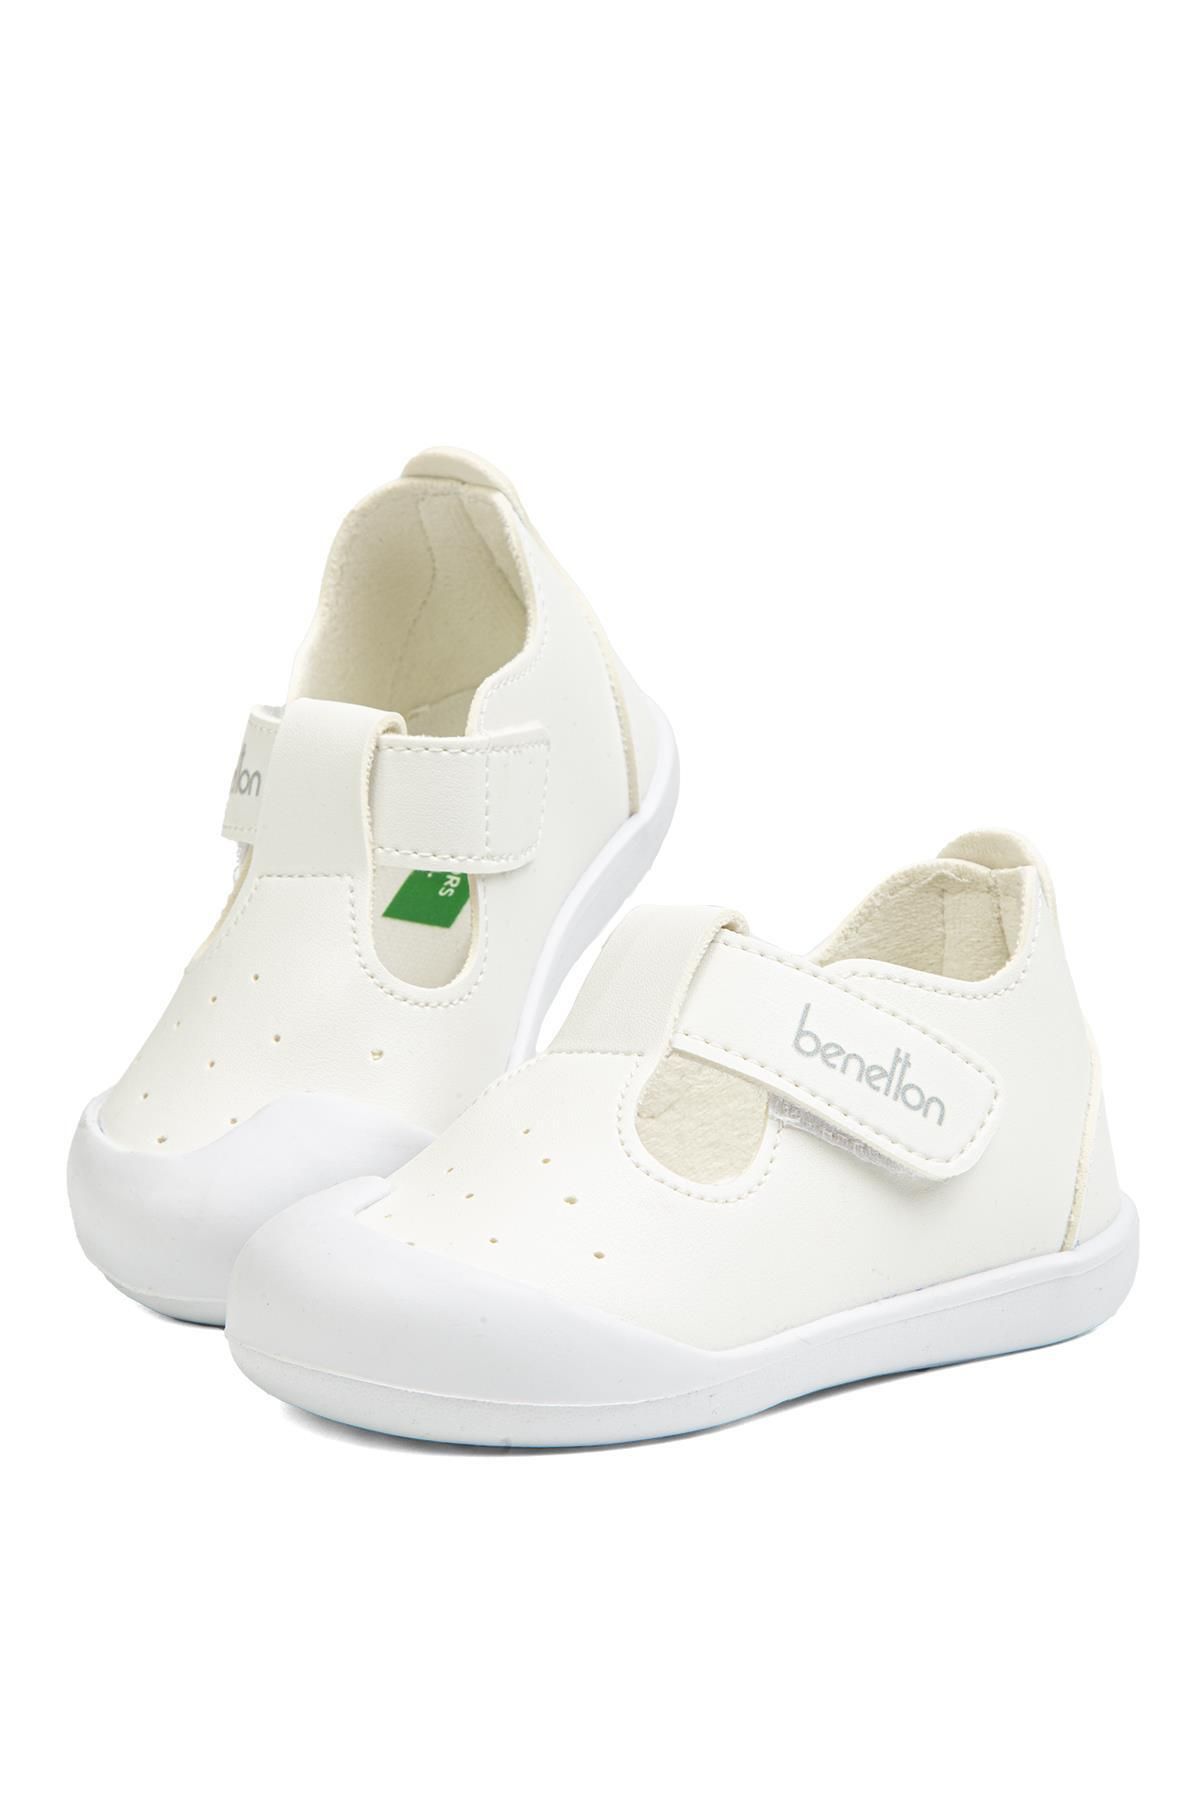 Benetton ® | BN-1250- سفید - کفش ورزشی بچه گانه